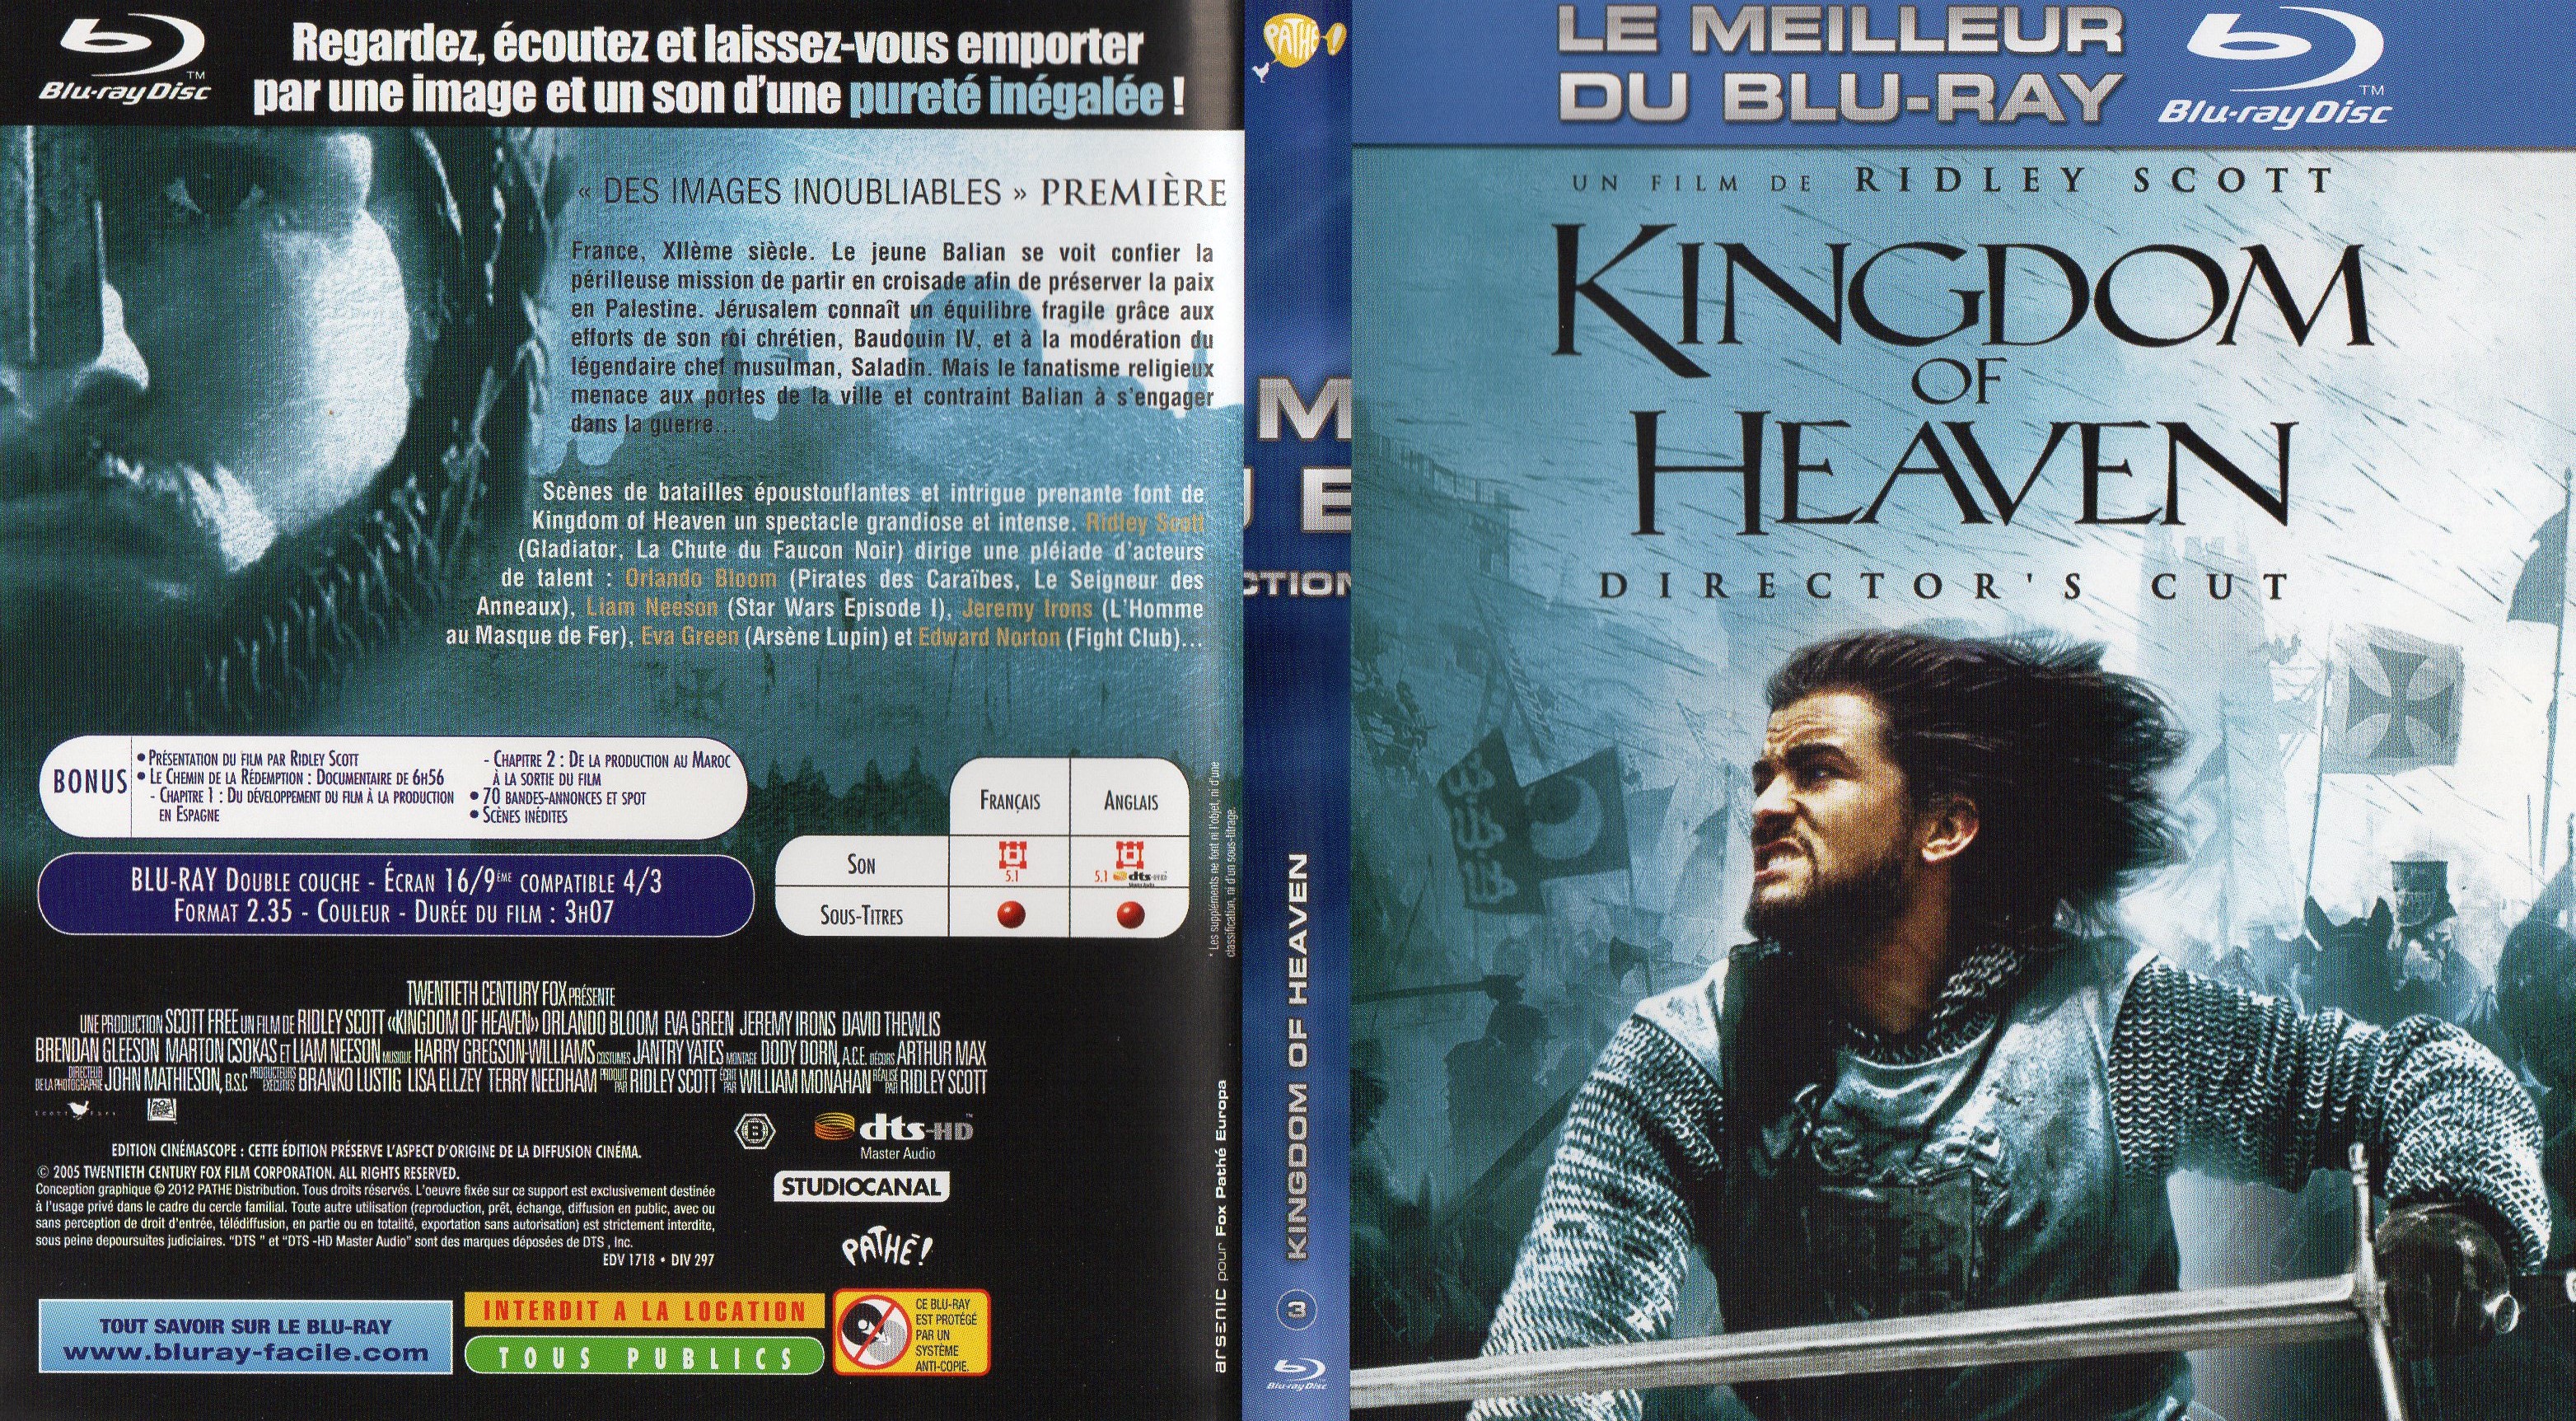 Jaquette DVD Kingdom of heaven (BLU-RAY) v2